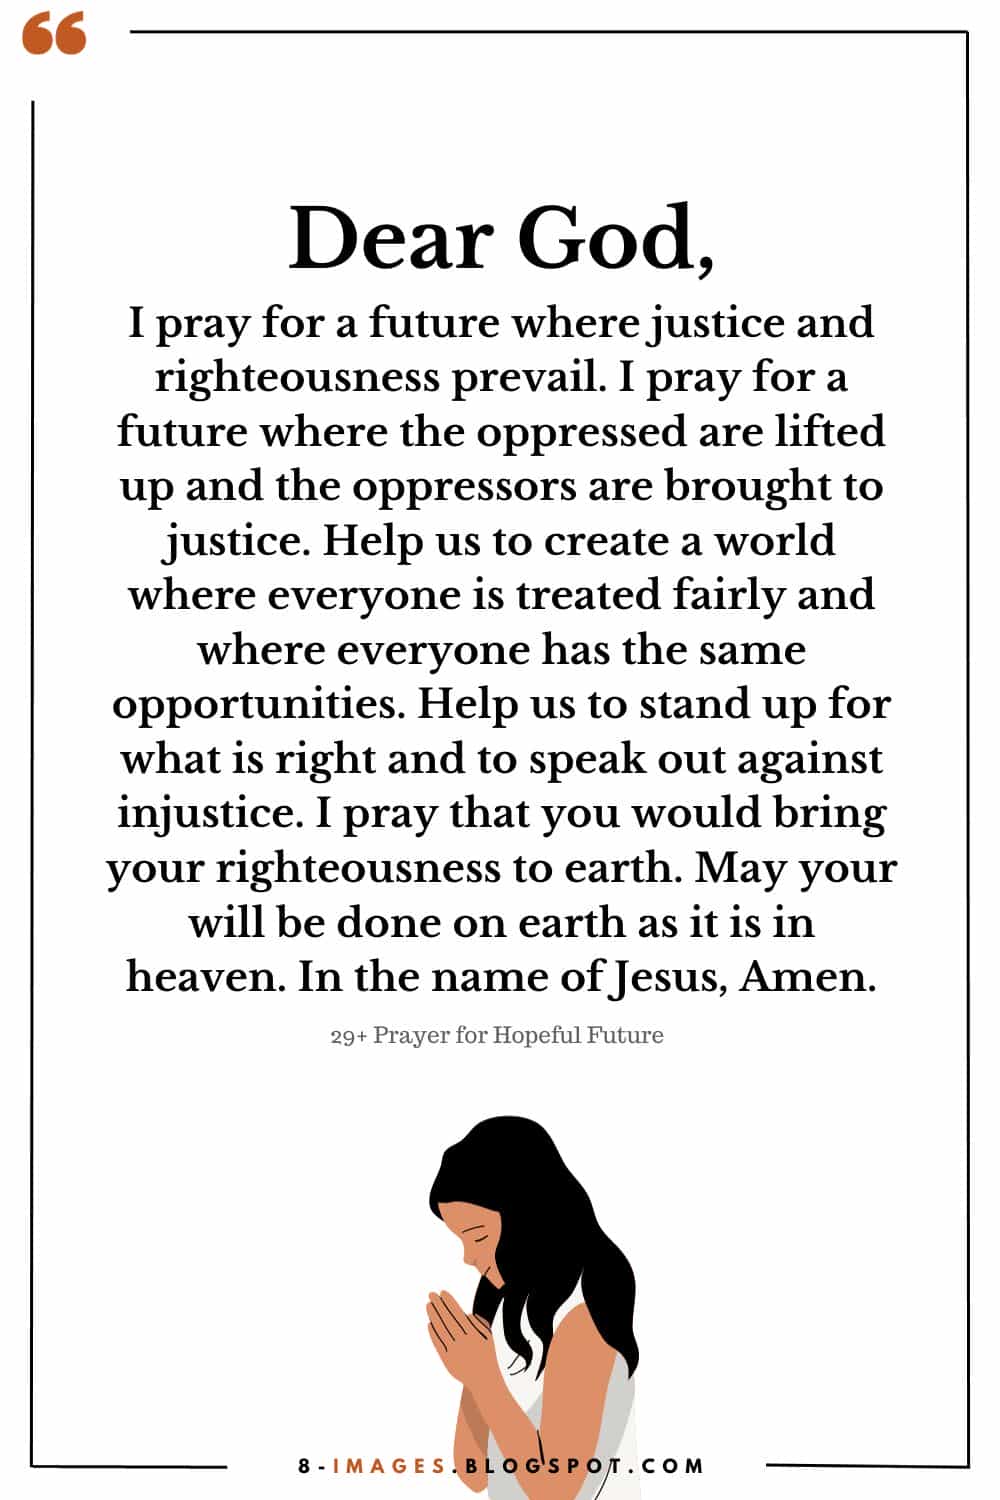 Prayer for Hopeful Future